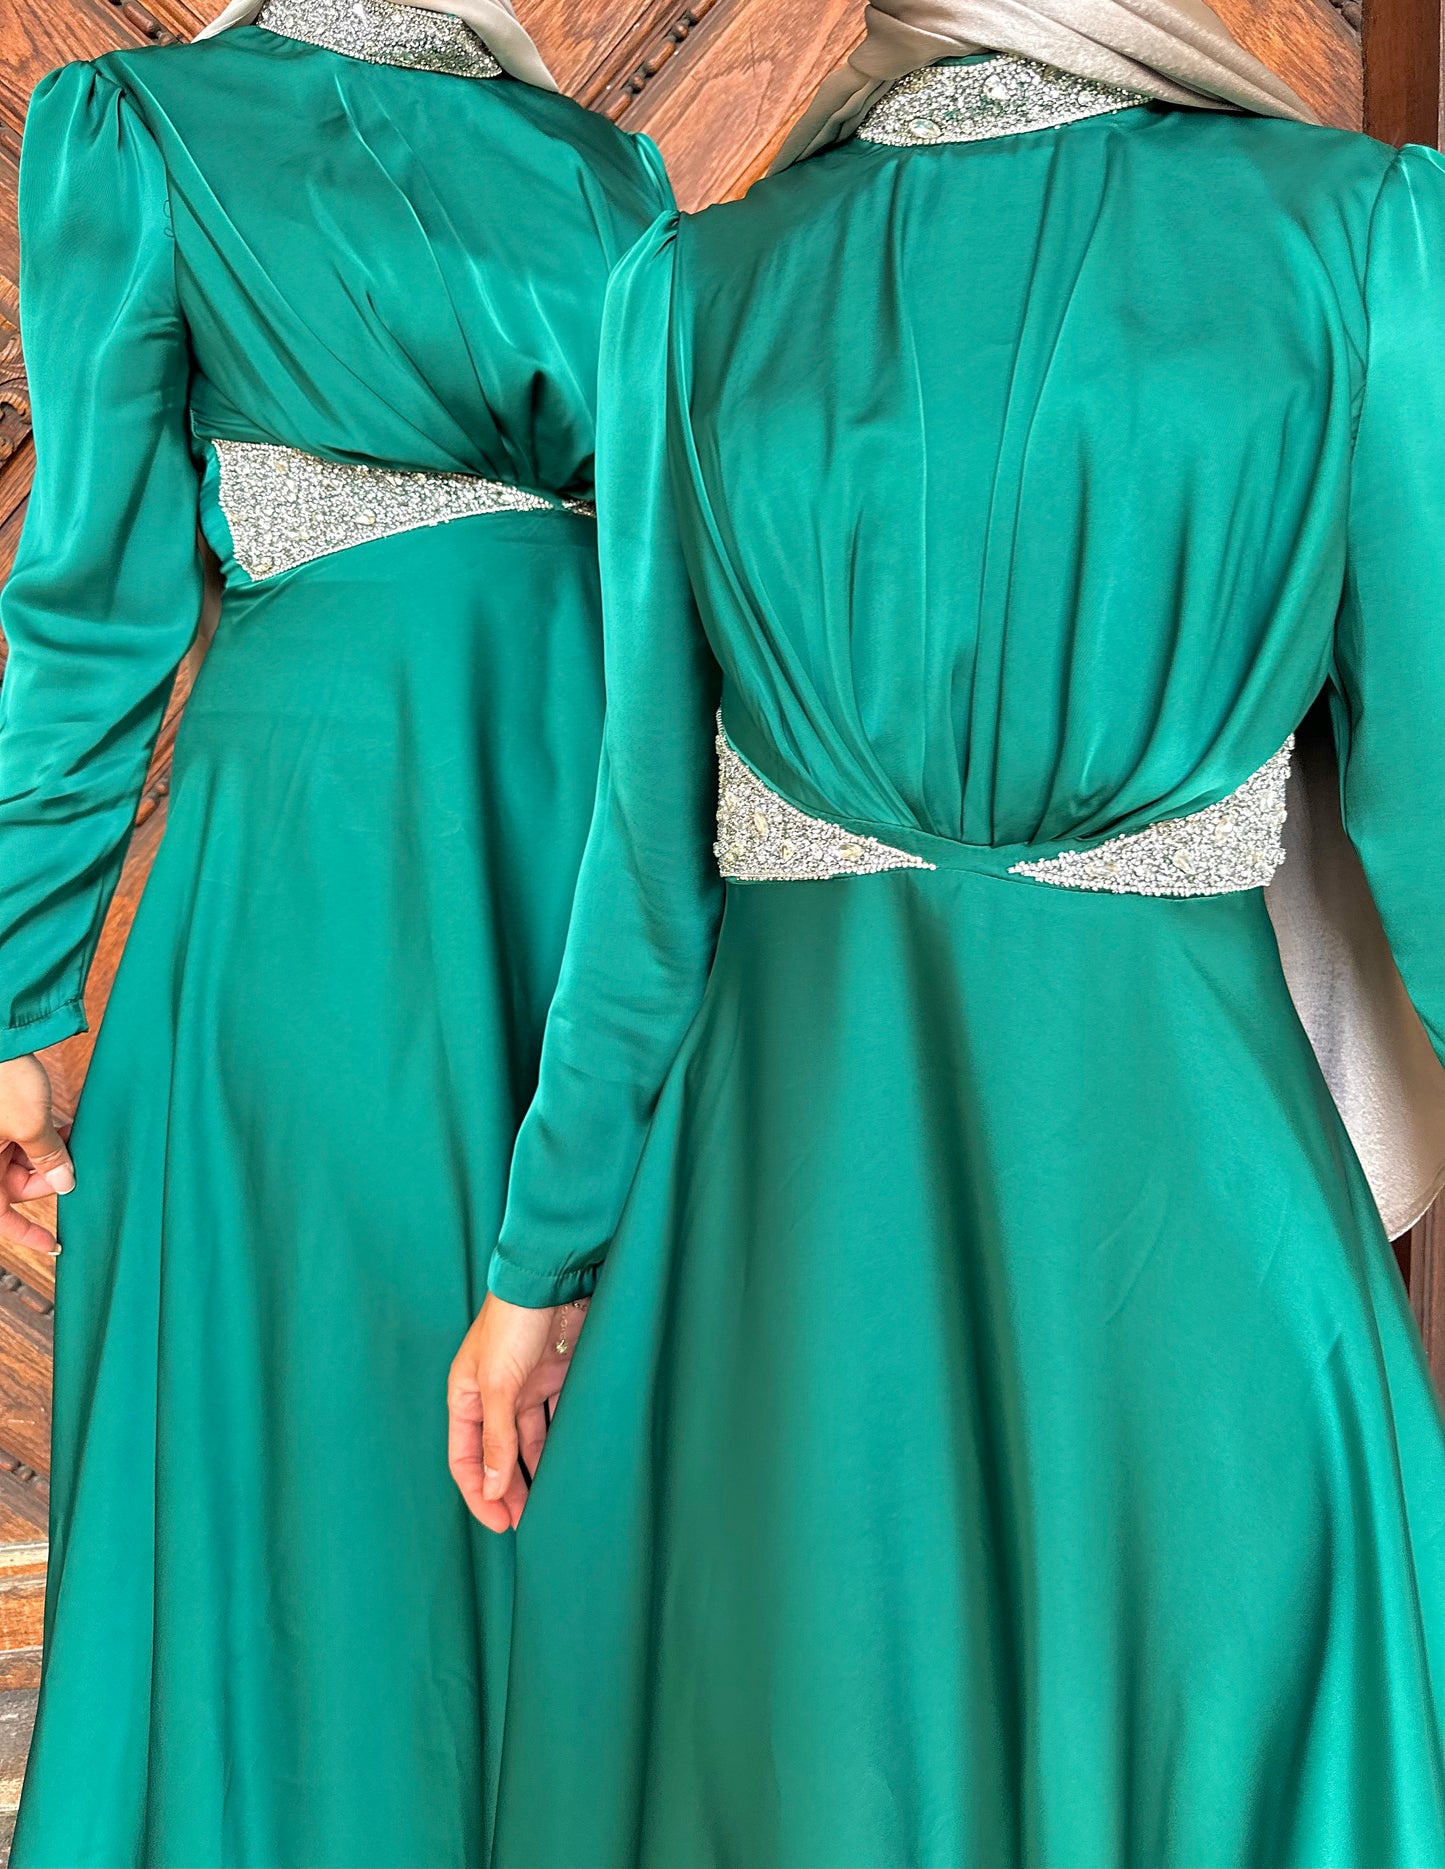 Royal green satin dress